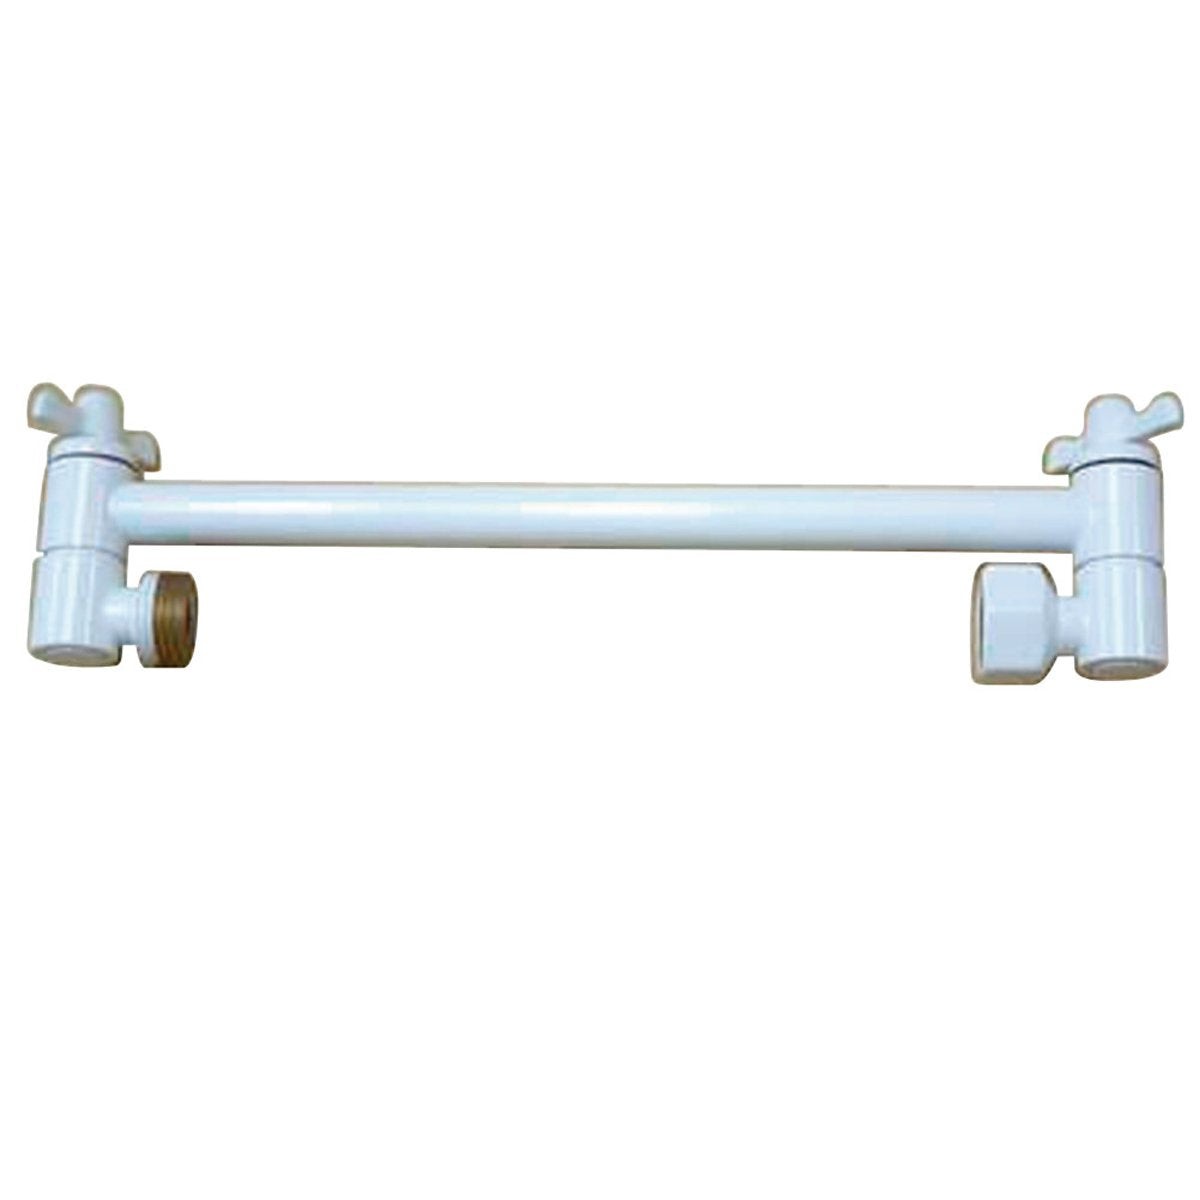 Kingston Brass Plumbing Parts 10" High-Low Shower Arm Adjustable